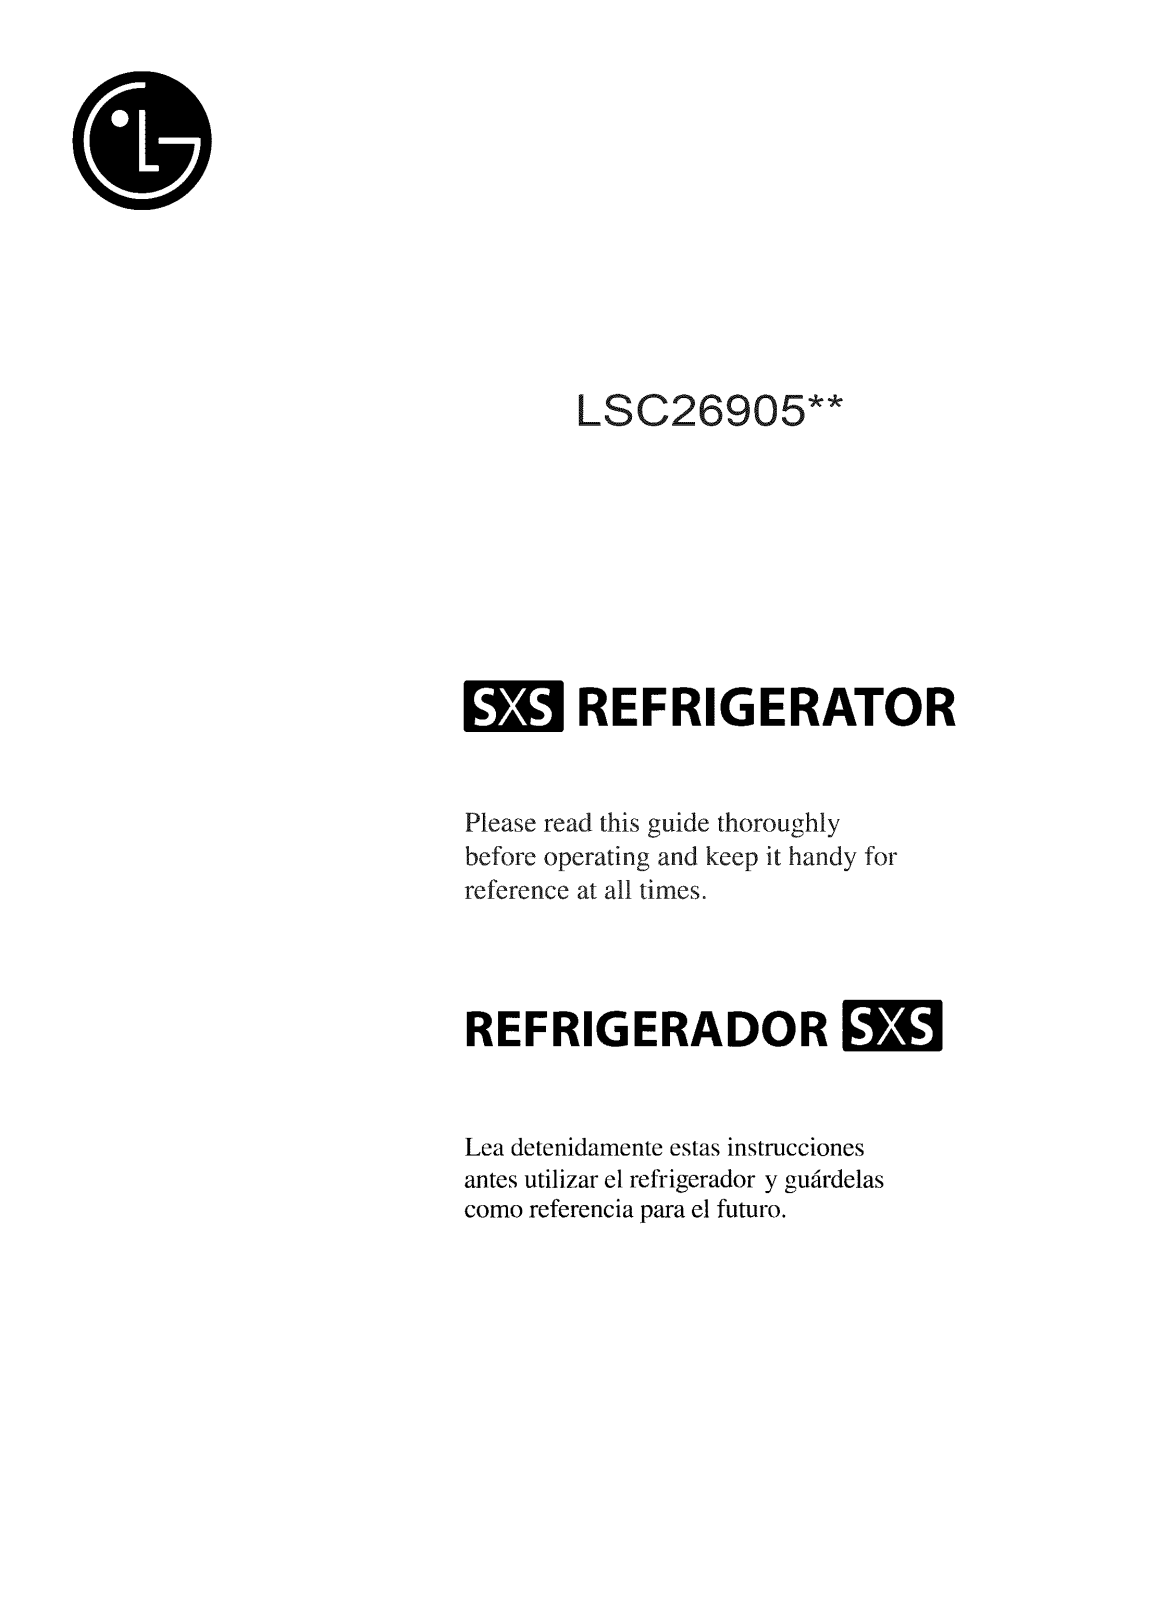 LG LSC26905SW Owner’s Manual